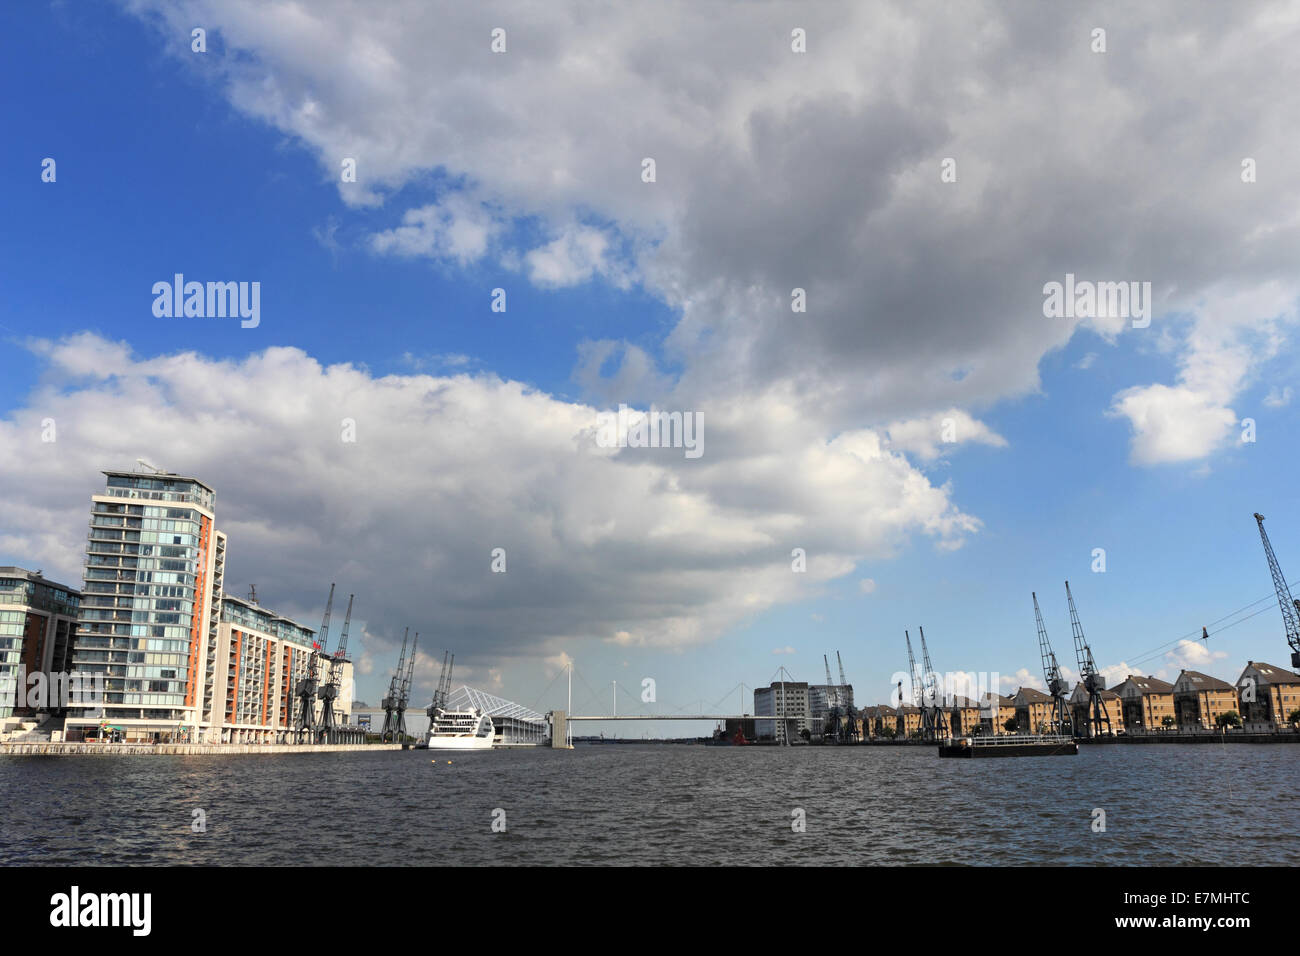 Royal Victoria Dock, East London, England, UK. Stock Photo